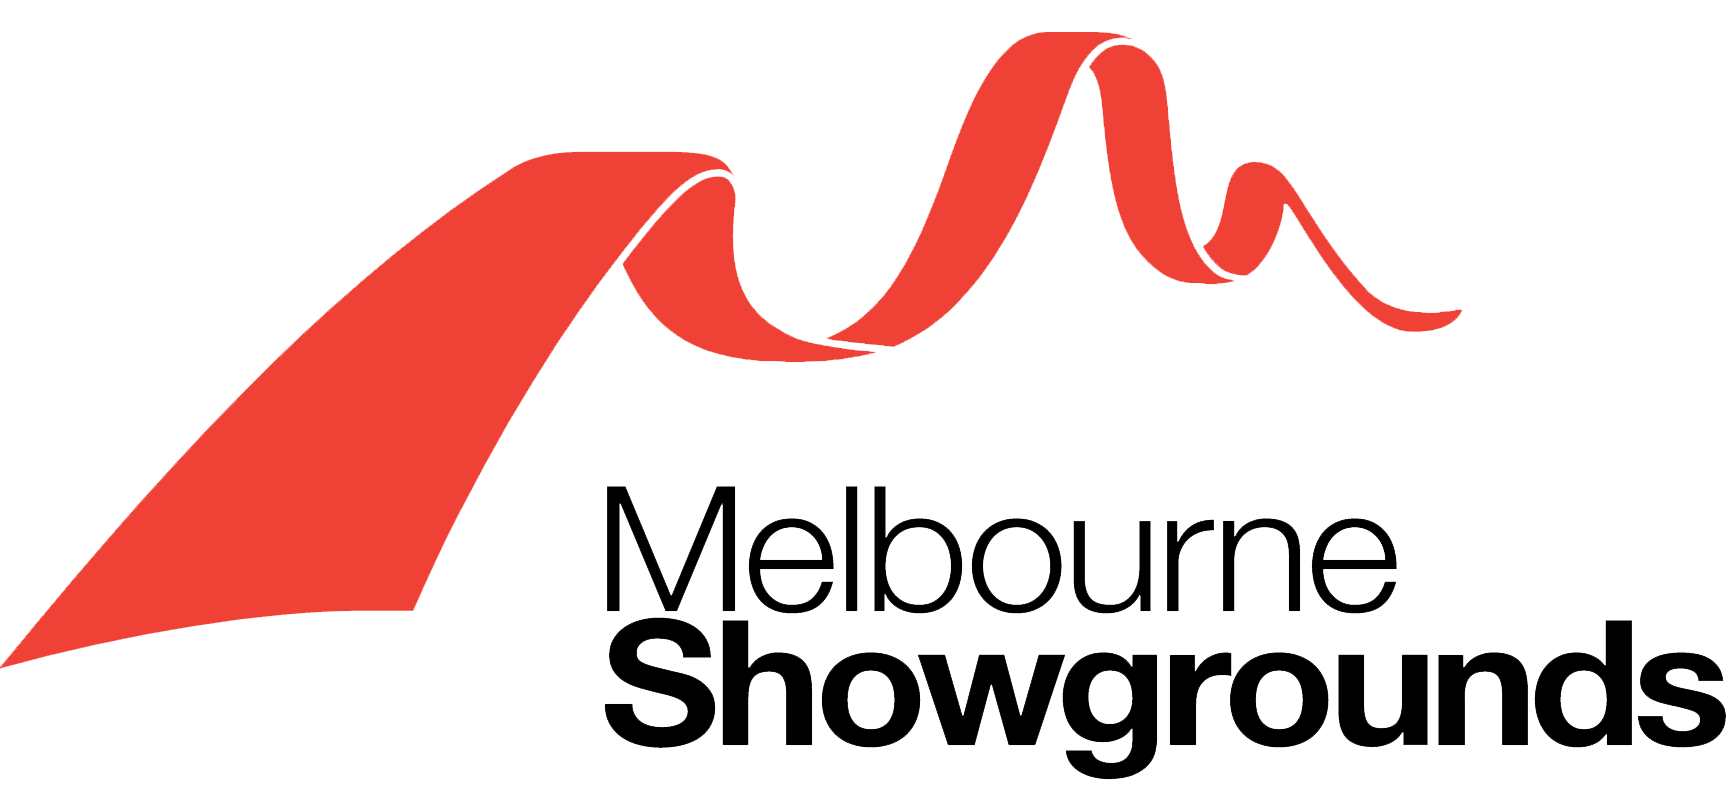 Melbourne Showgrounds